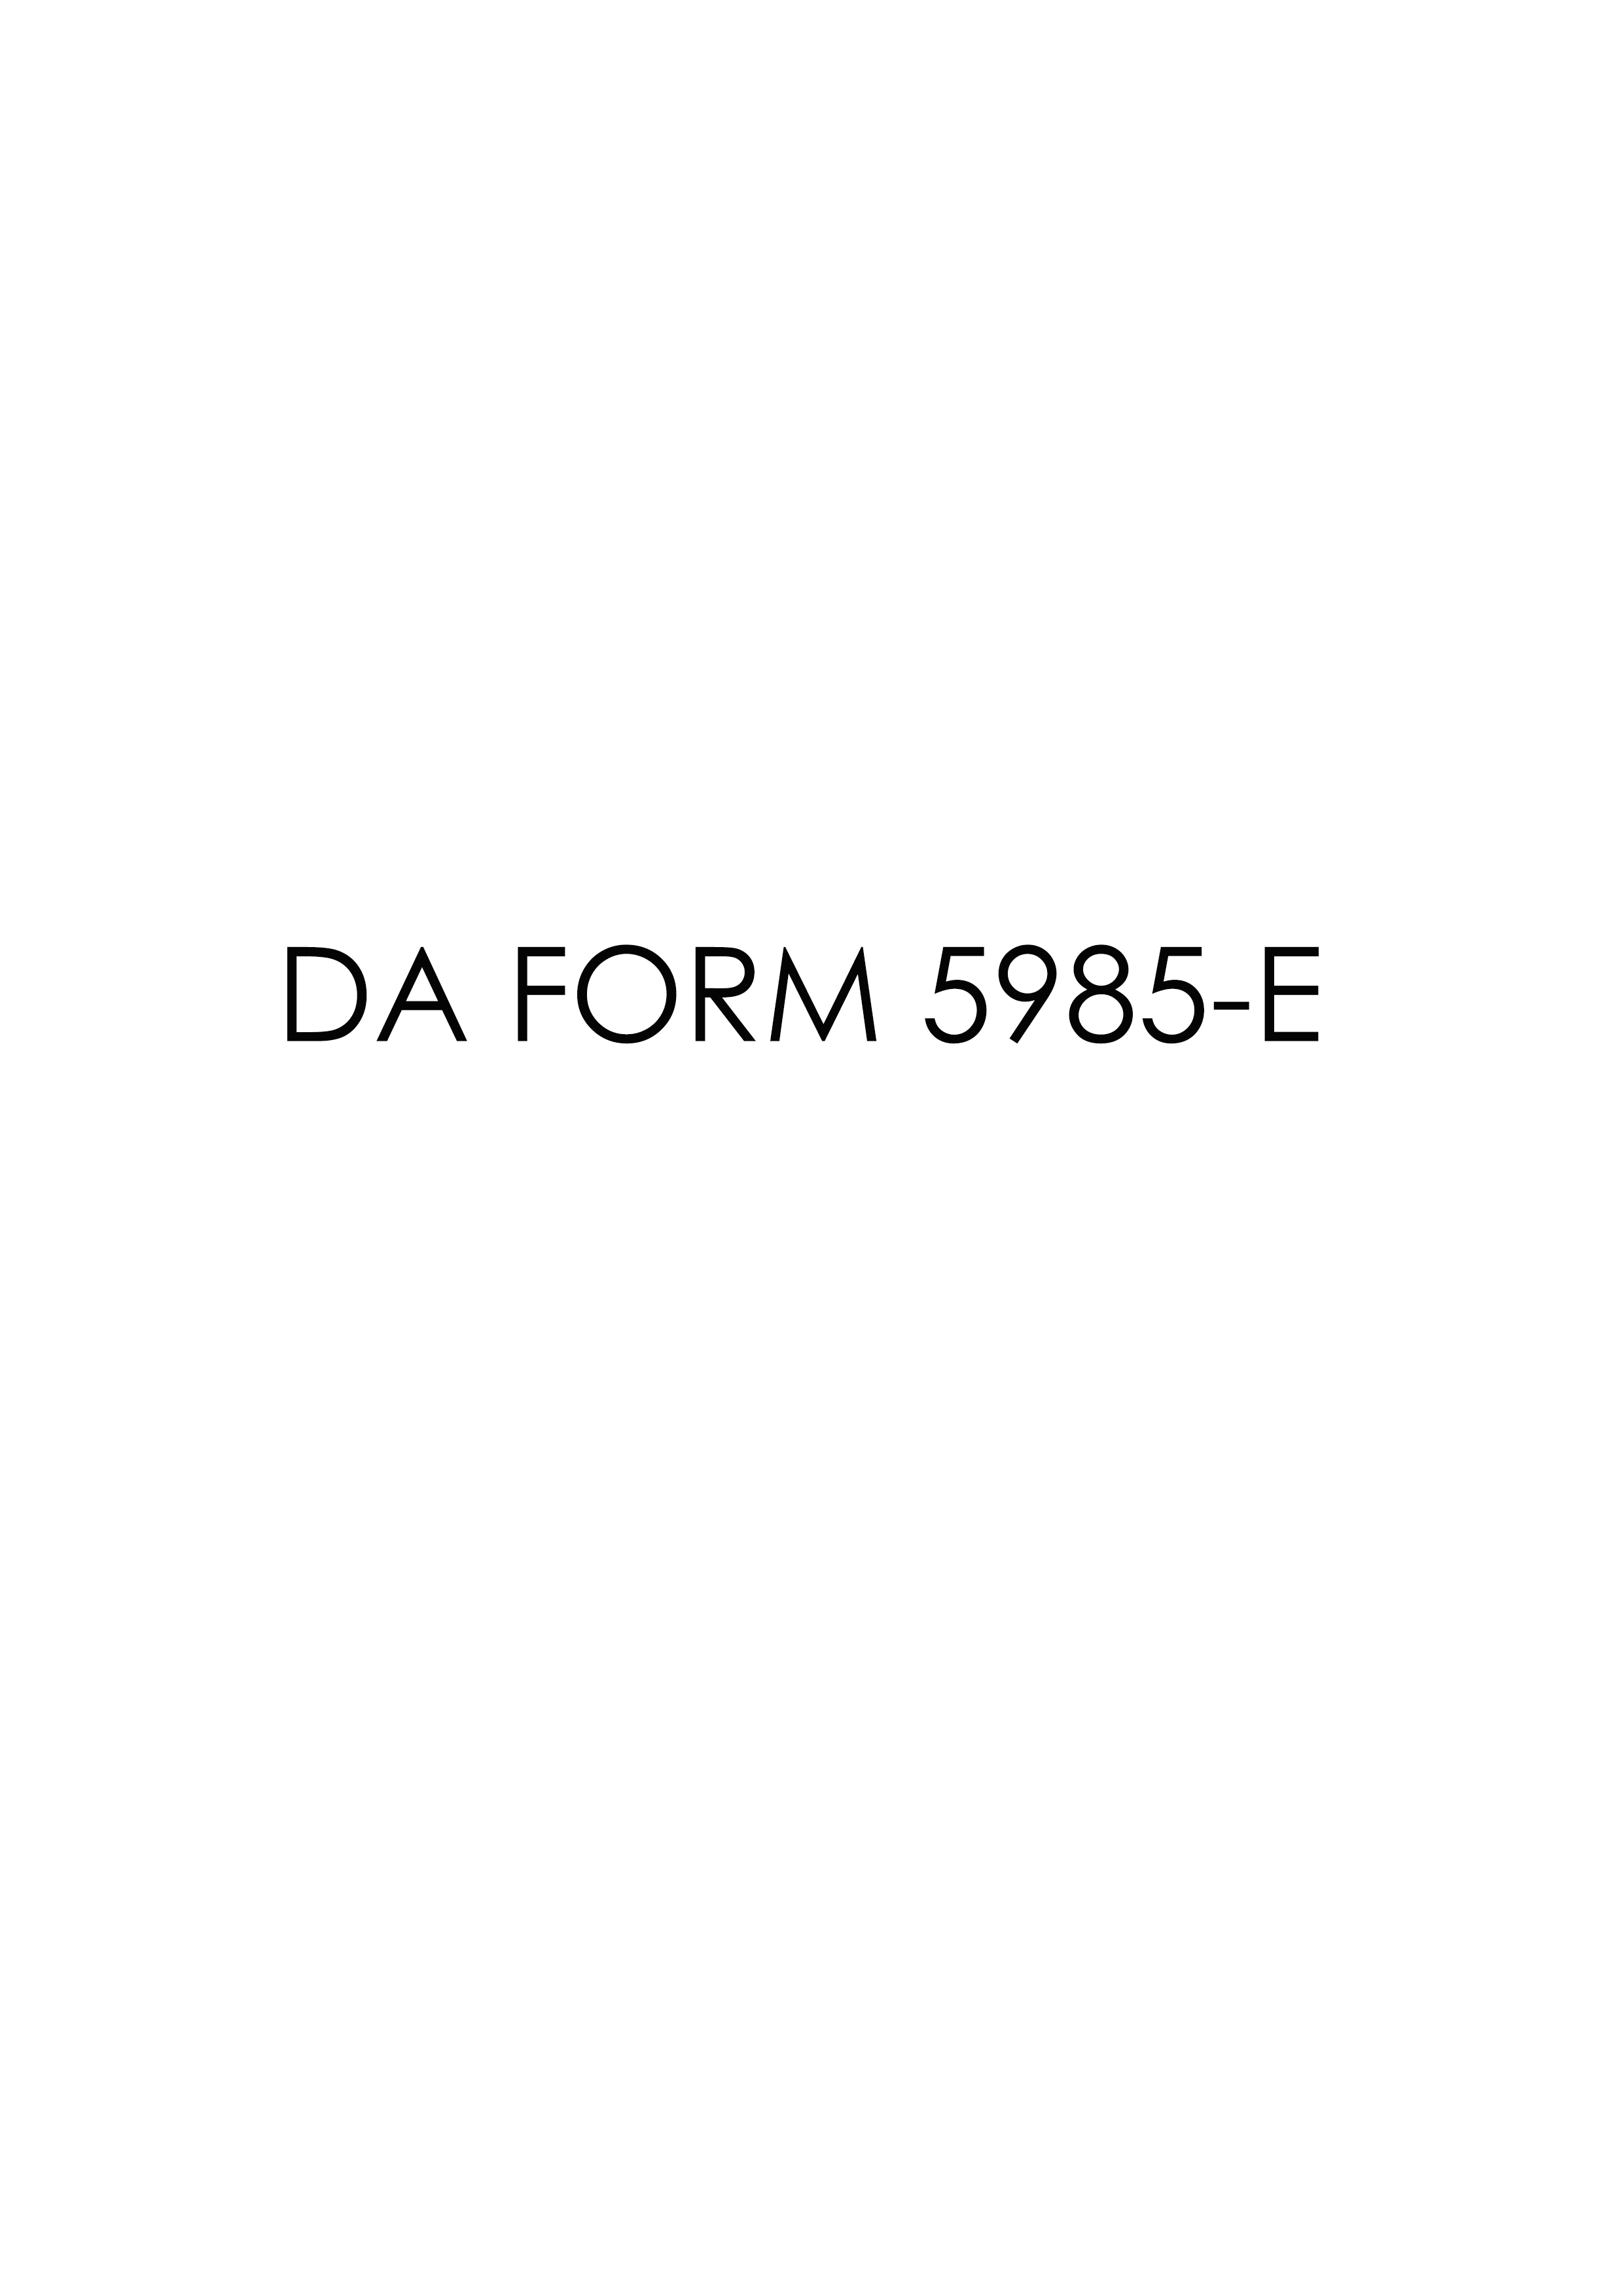 da Form 5985-E fillable